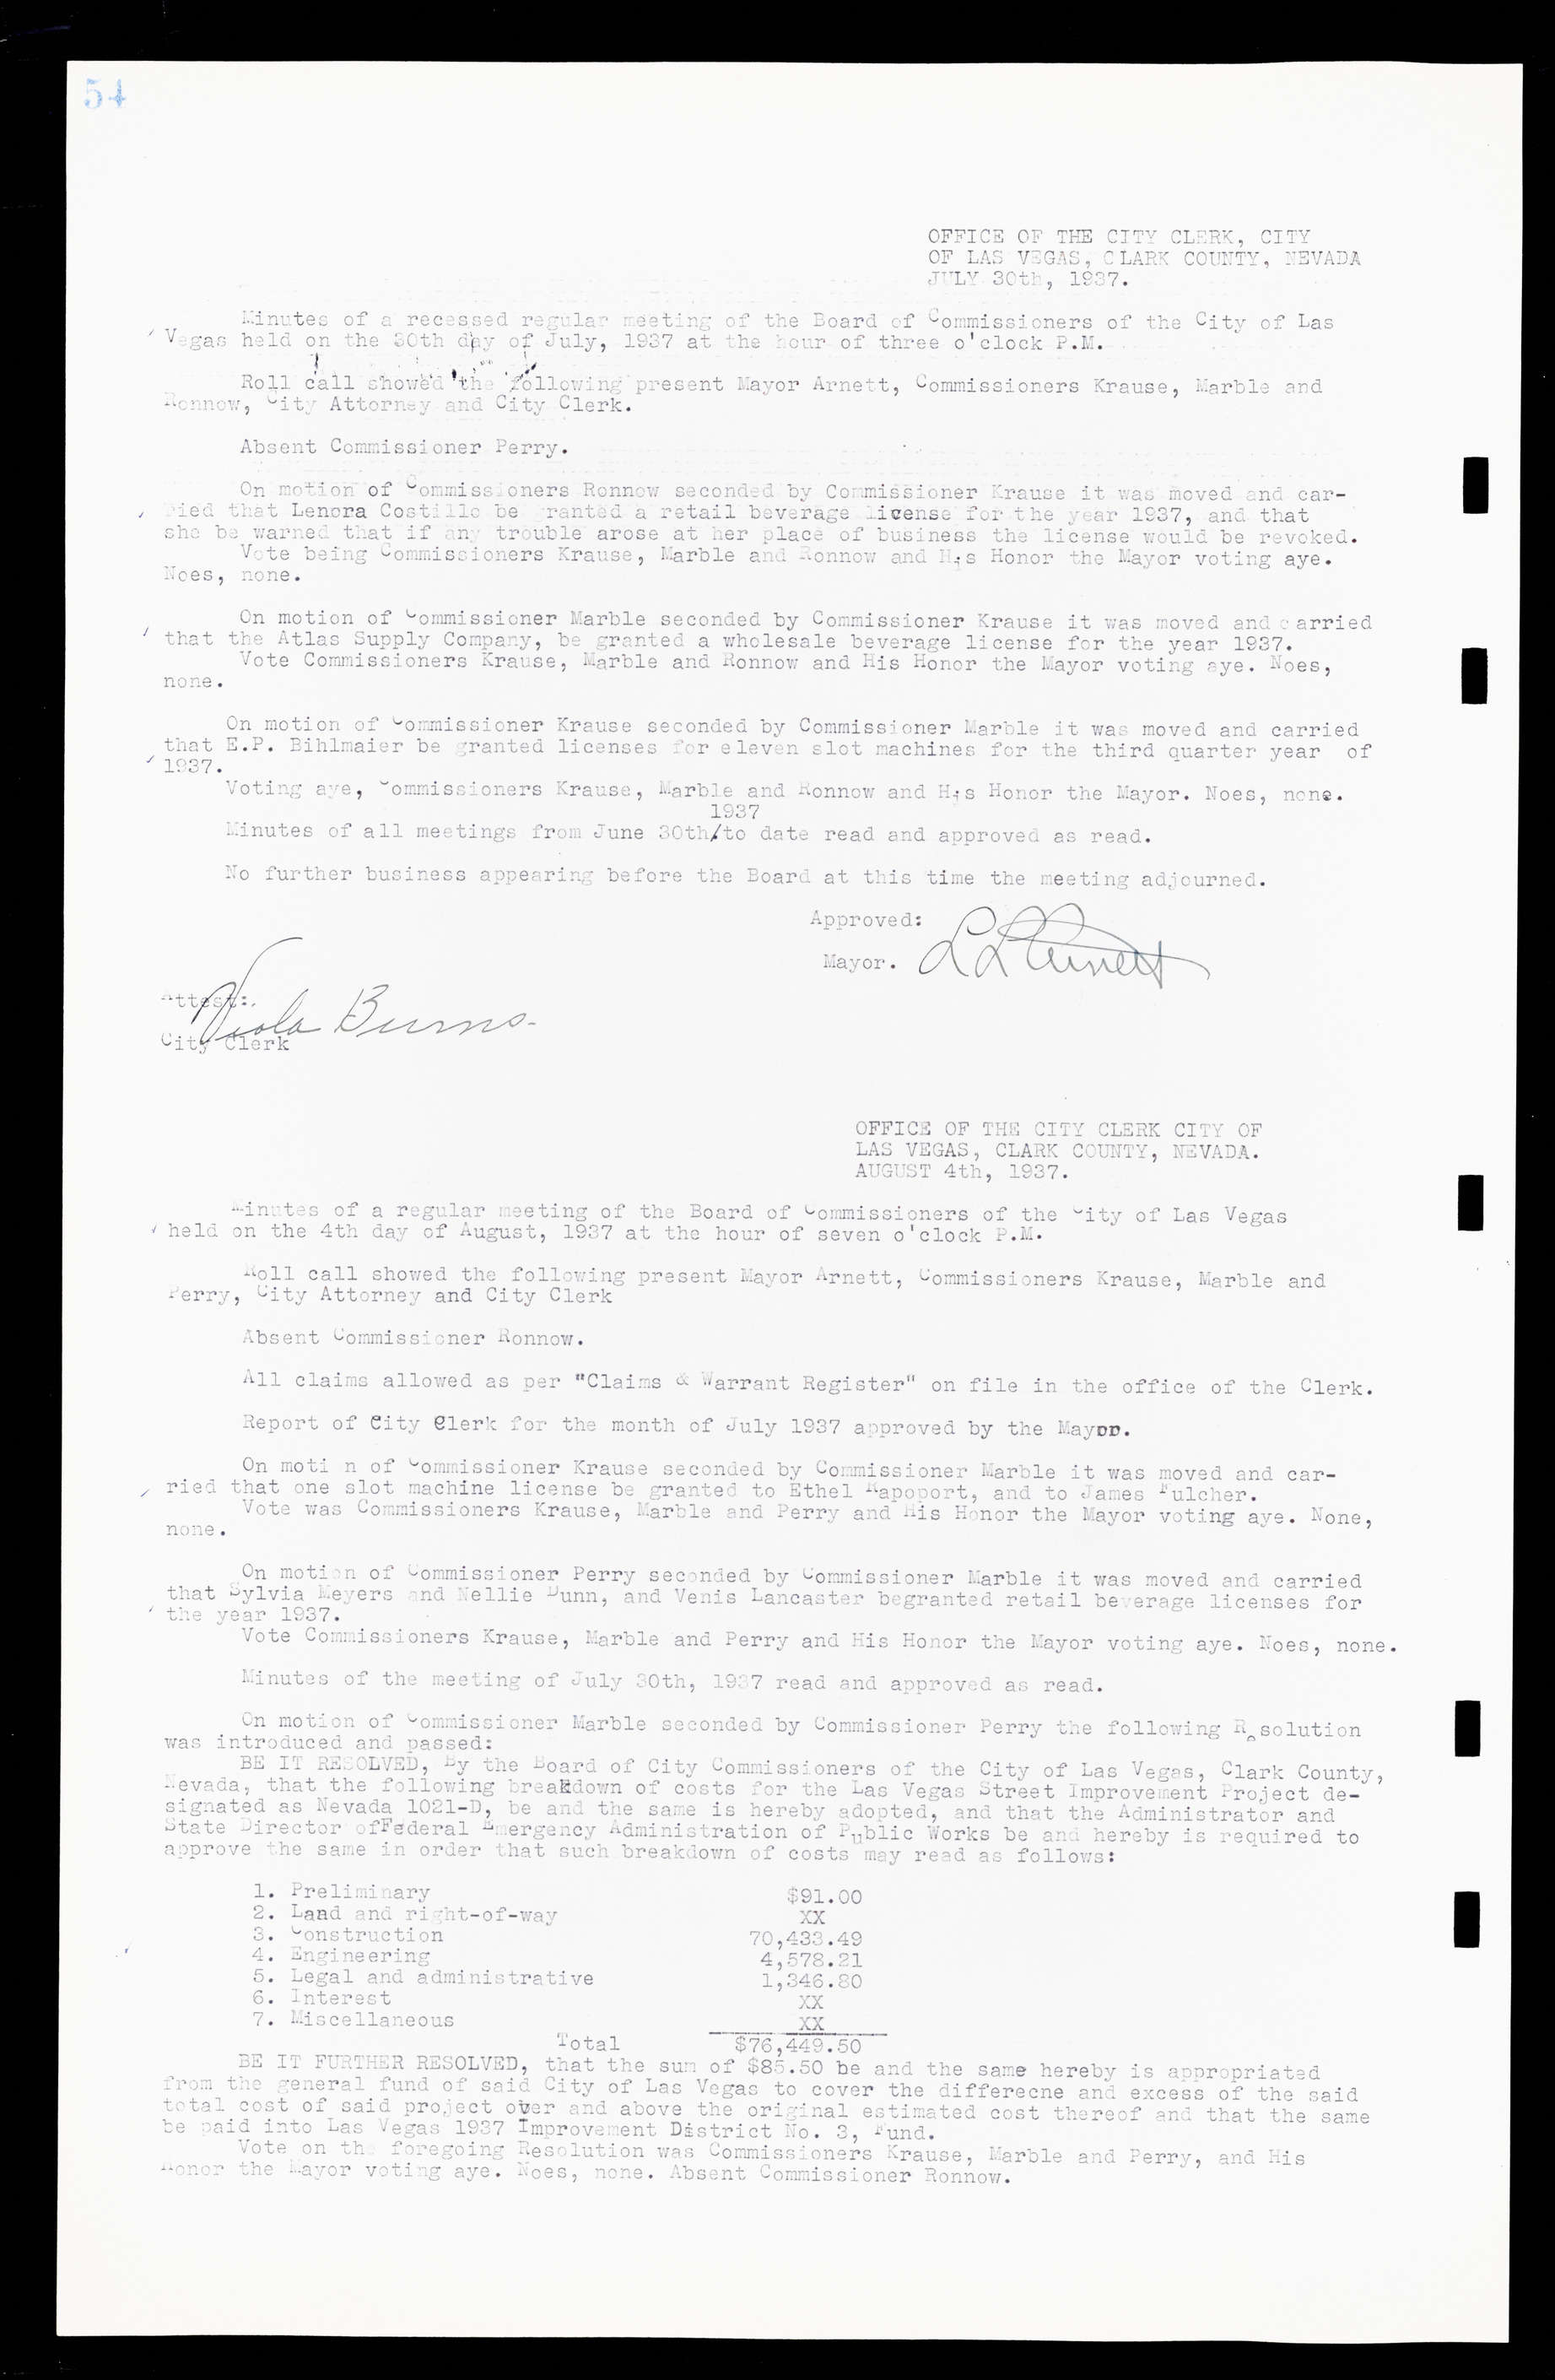 Las Vegas City Commission Minutes, February 17, 1937 to August 4, 1942, lvc000004-62